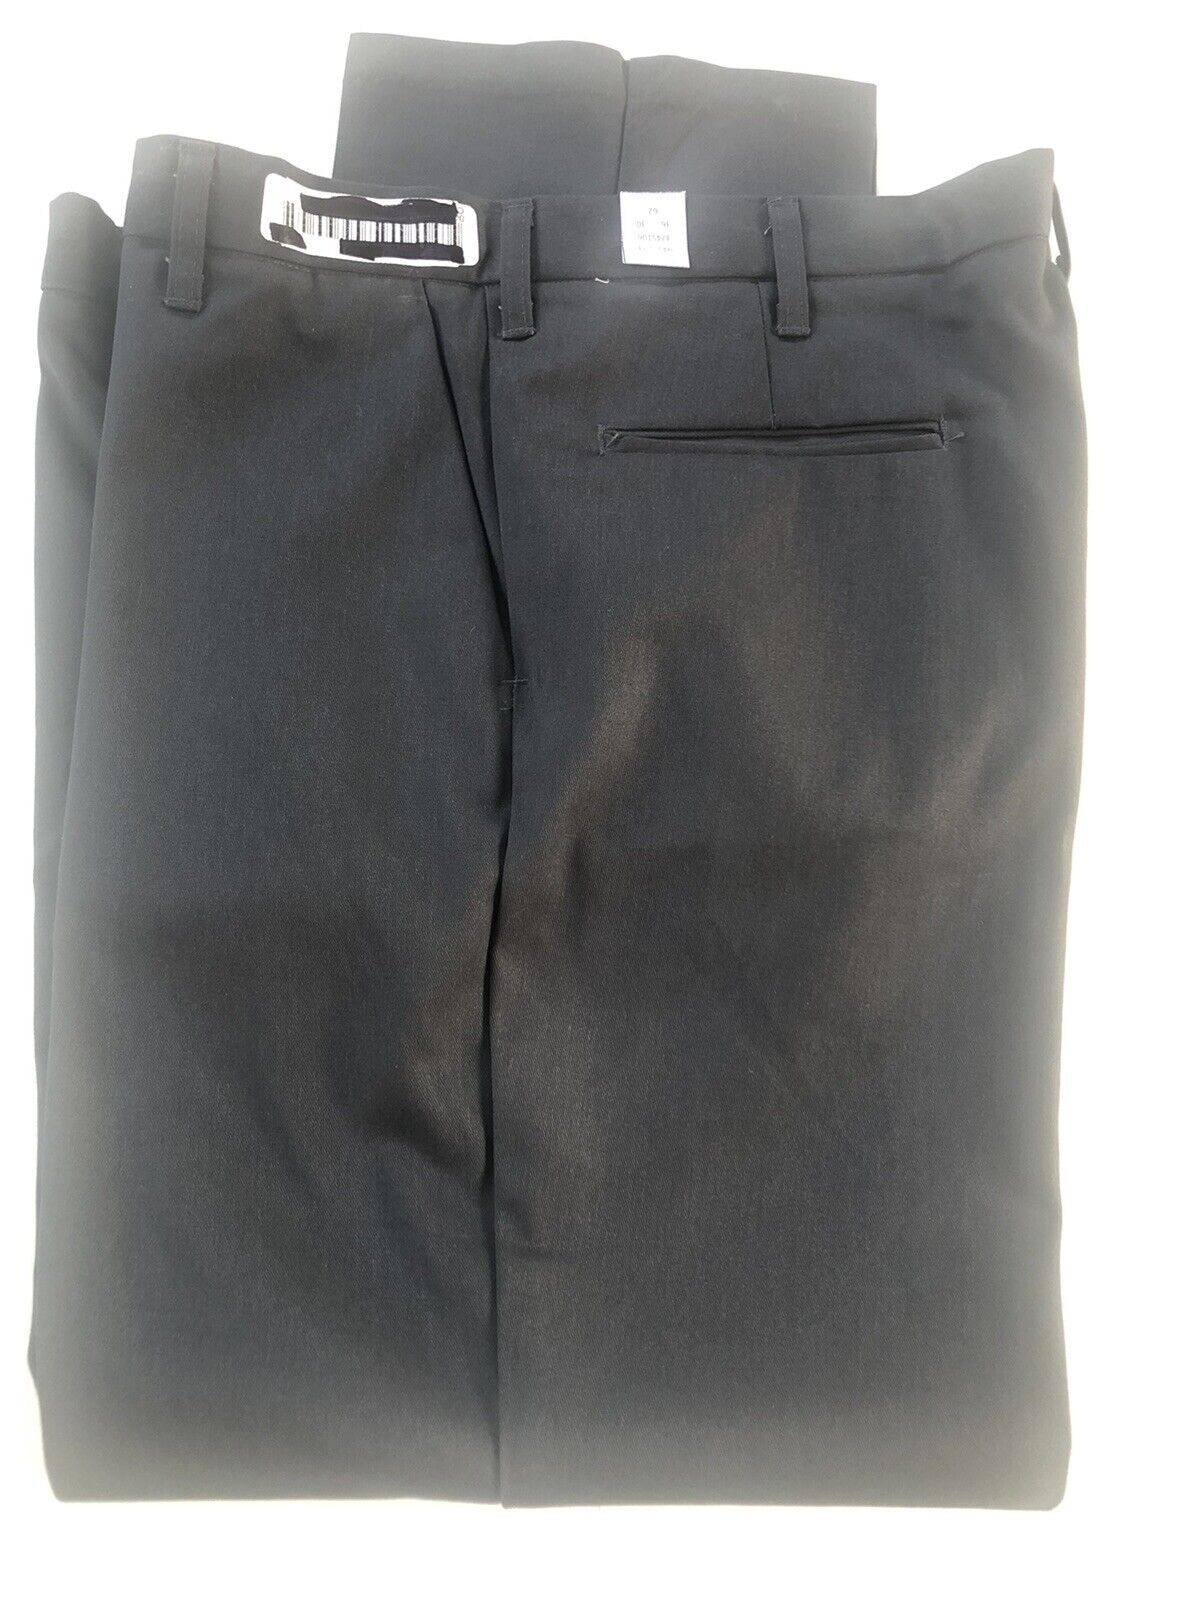 3 Cintas Comfort Flex Charcoal  Gray Work Pants Size 36x30 #945-33 cintas Does Not Apply - фотография #2